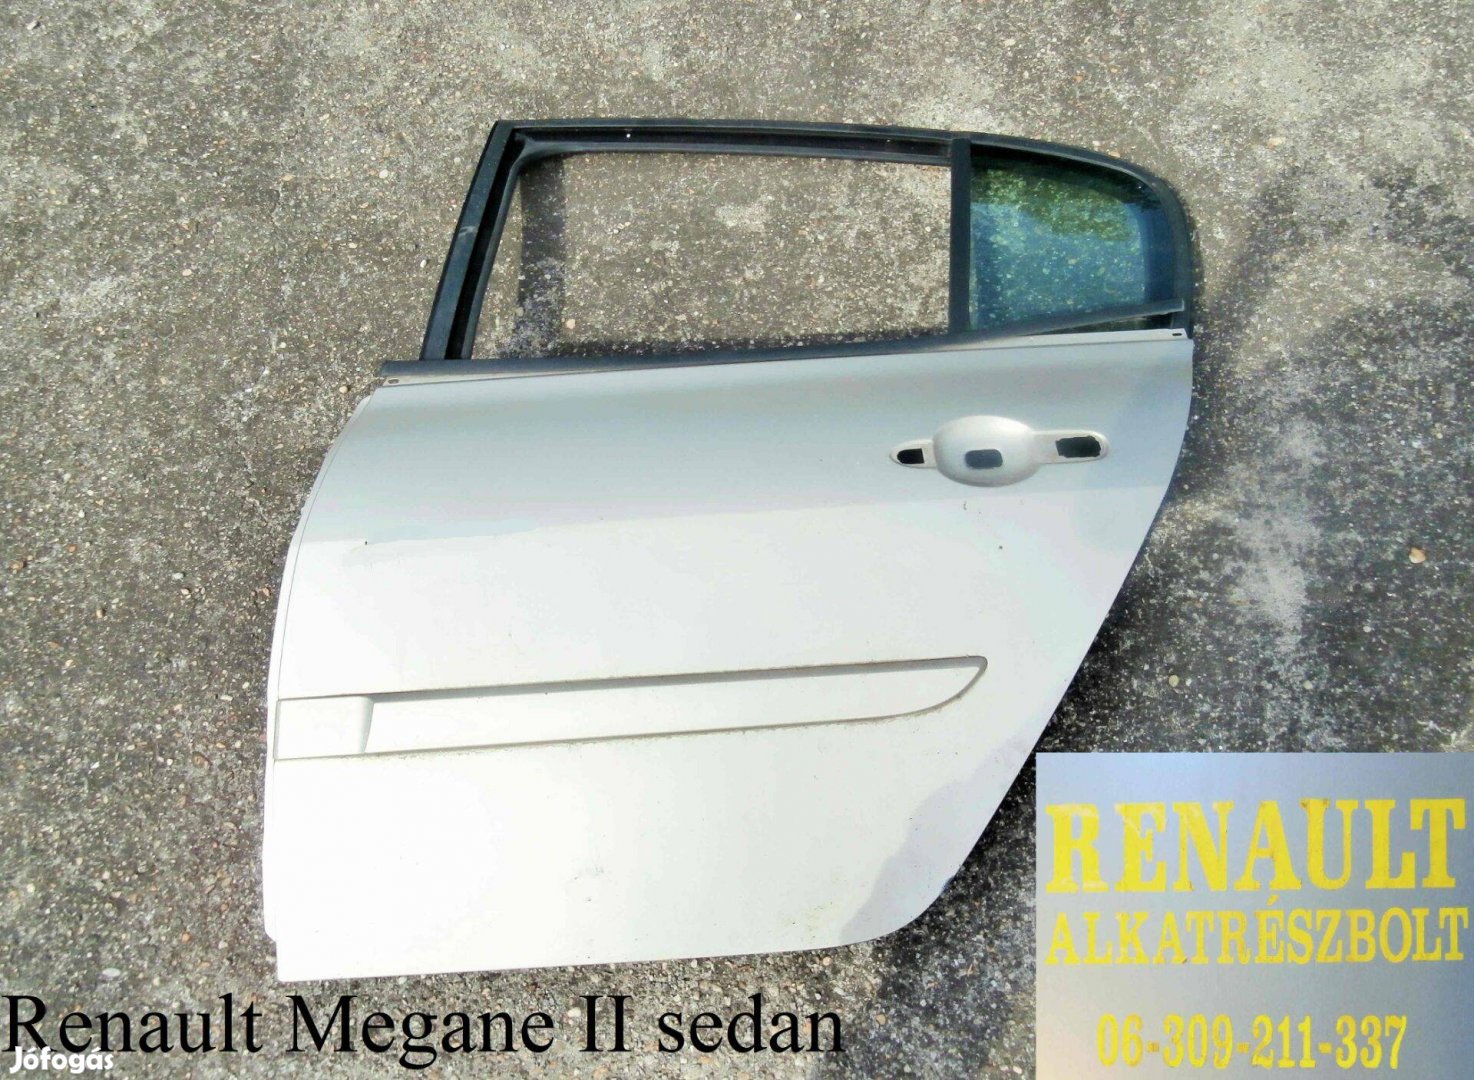 Renault Megane II sedan bal hátsó ajtó